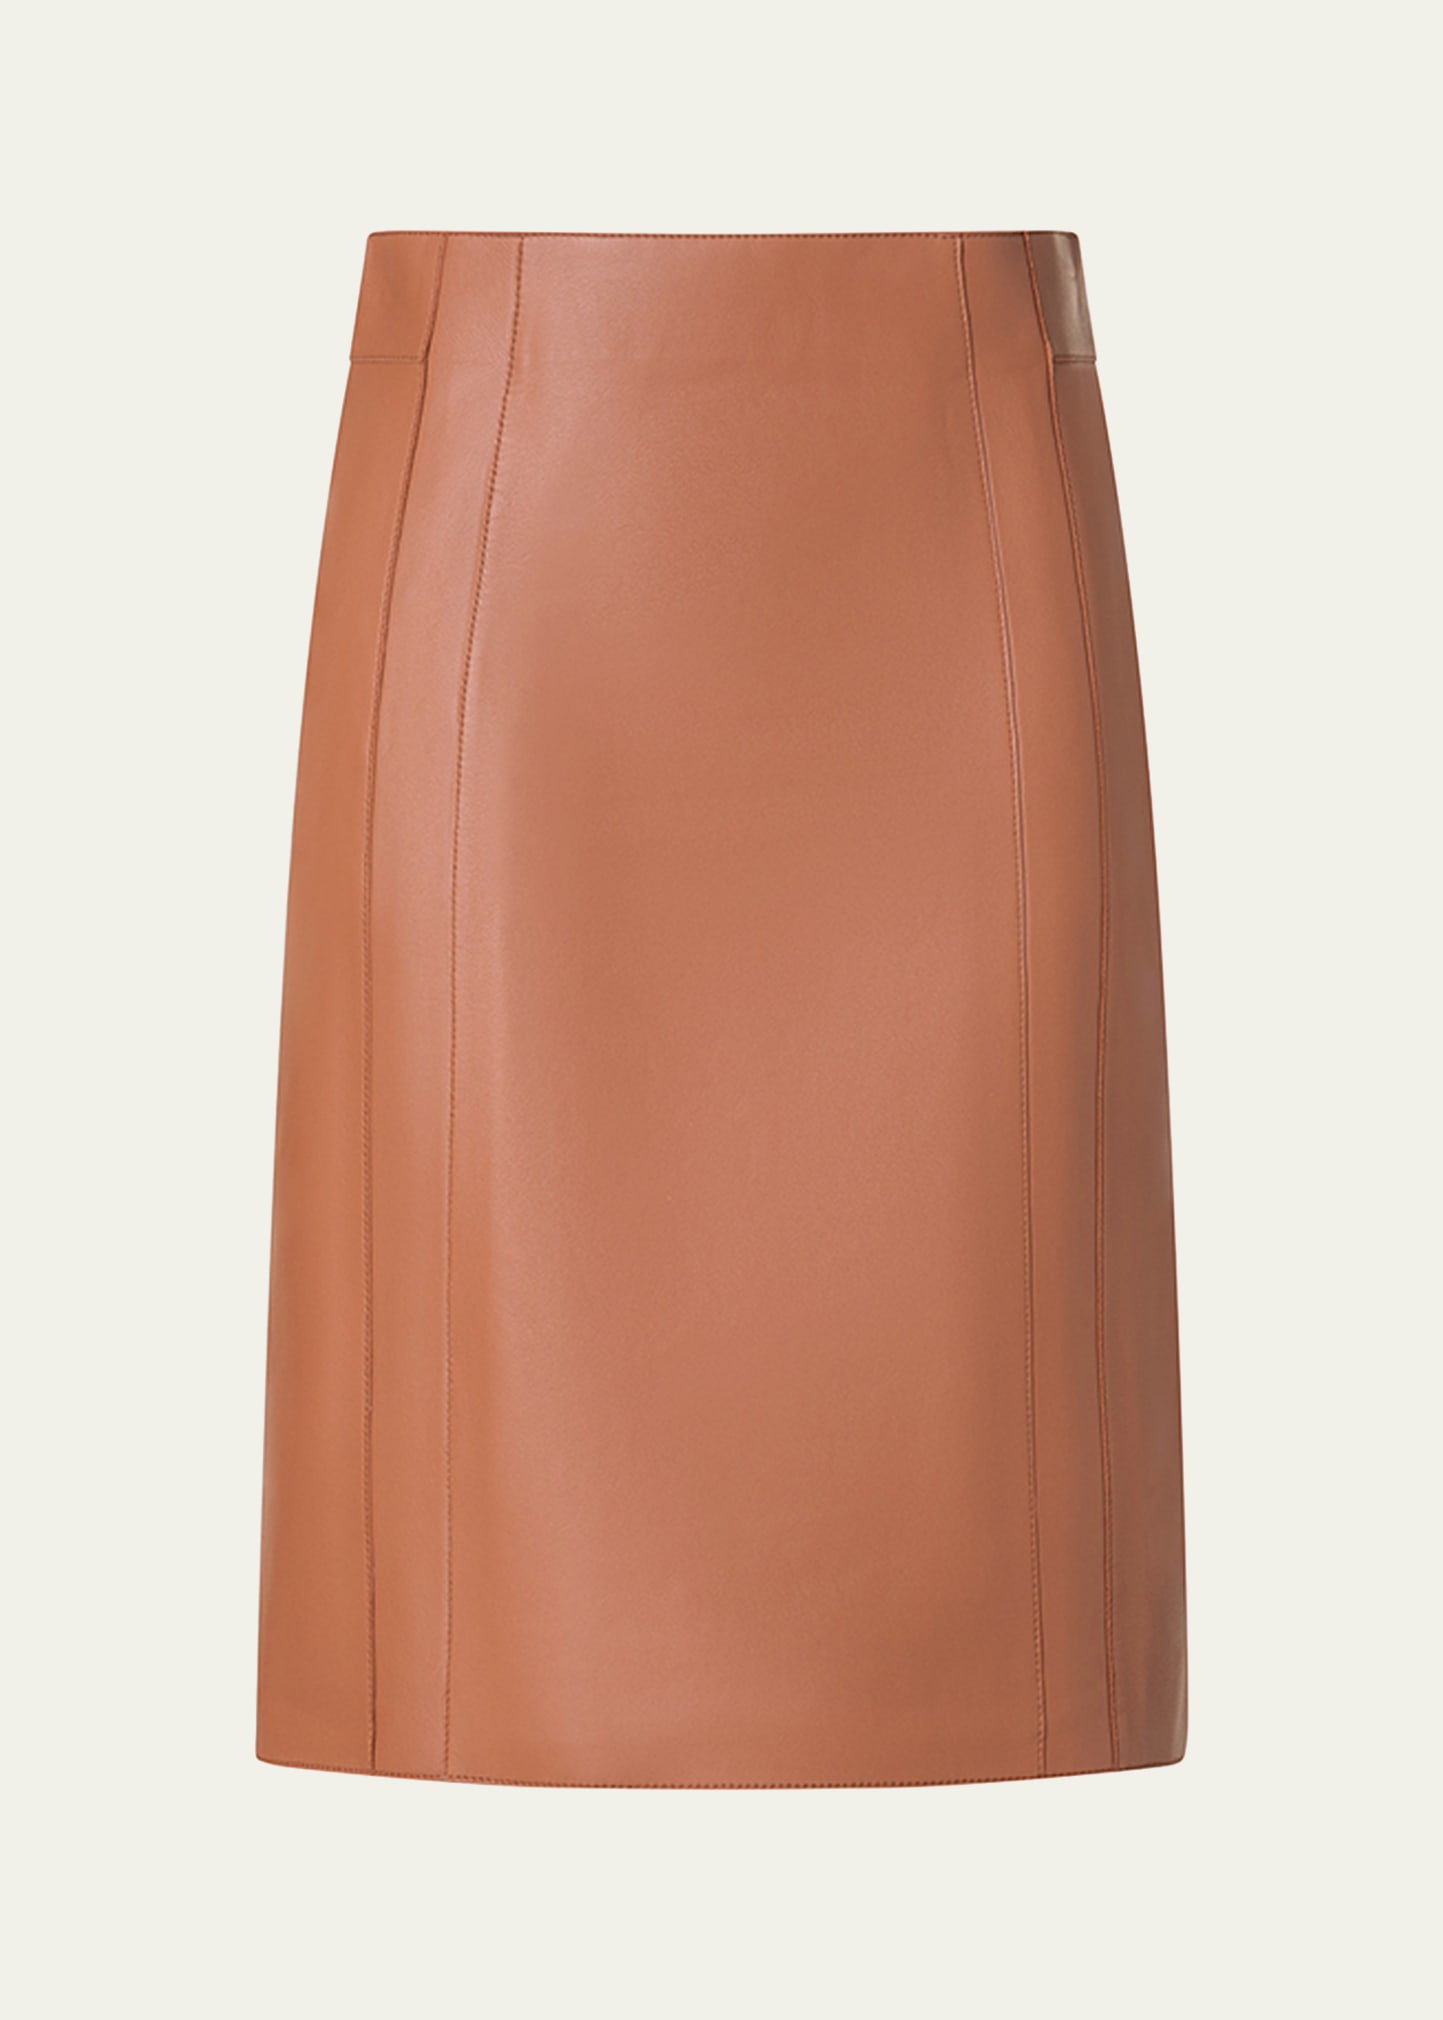 Lambskin Leather Short Pencil Skirt